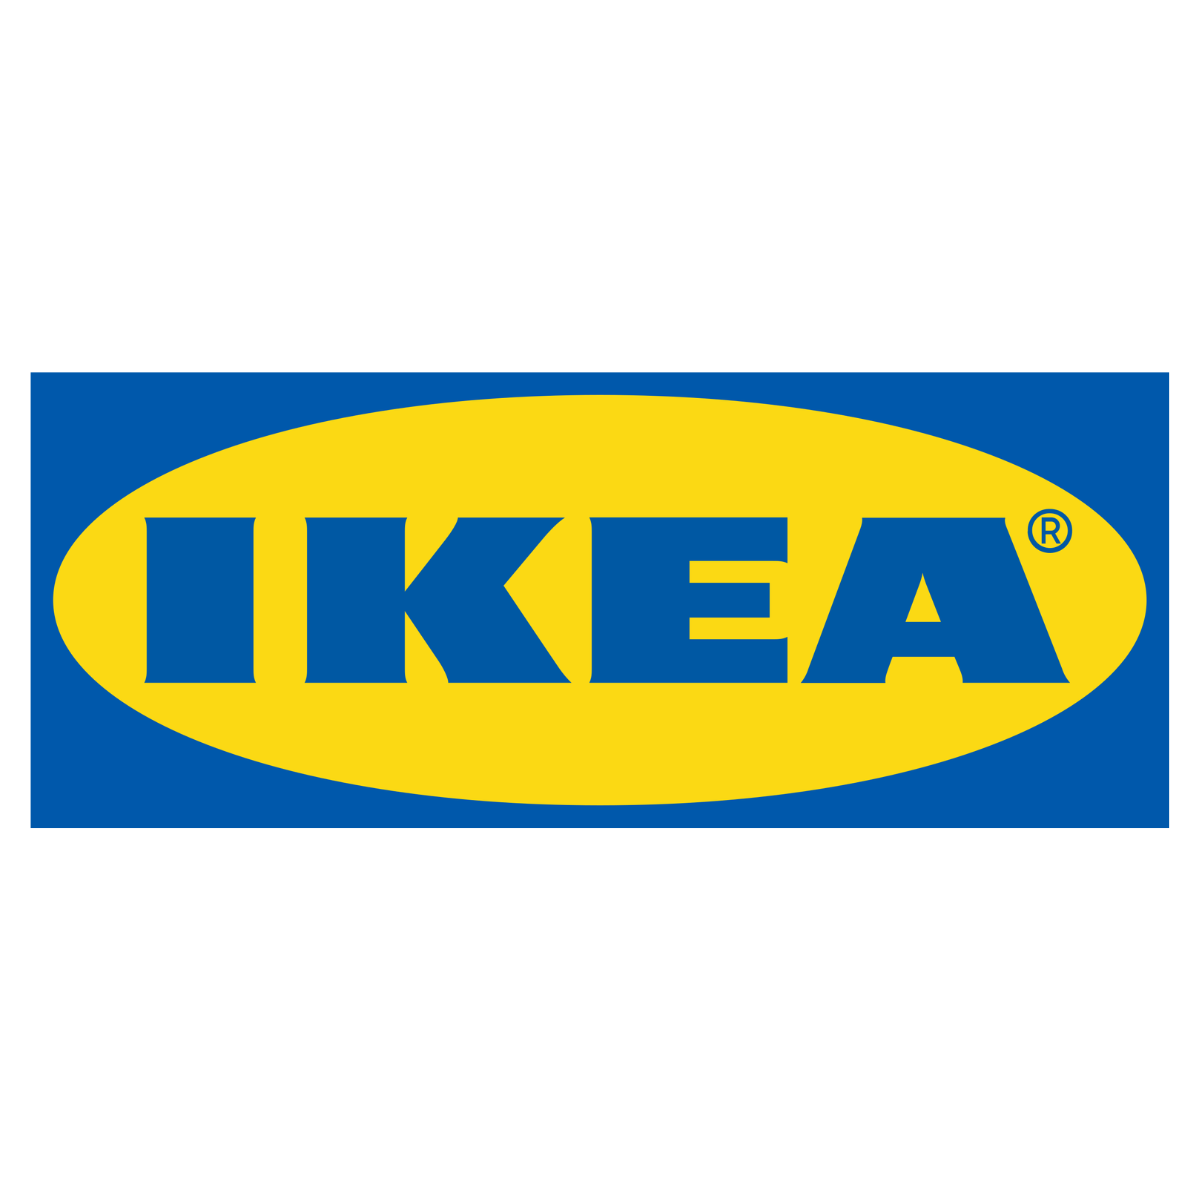 IKEA for website